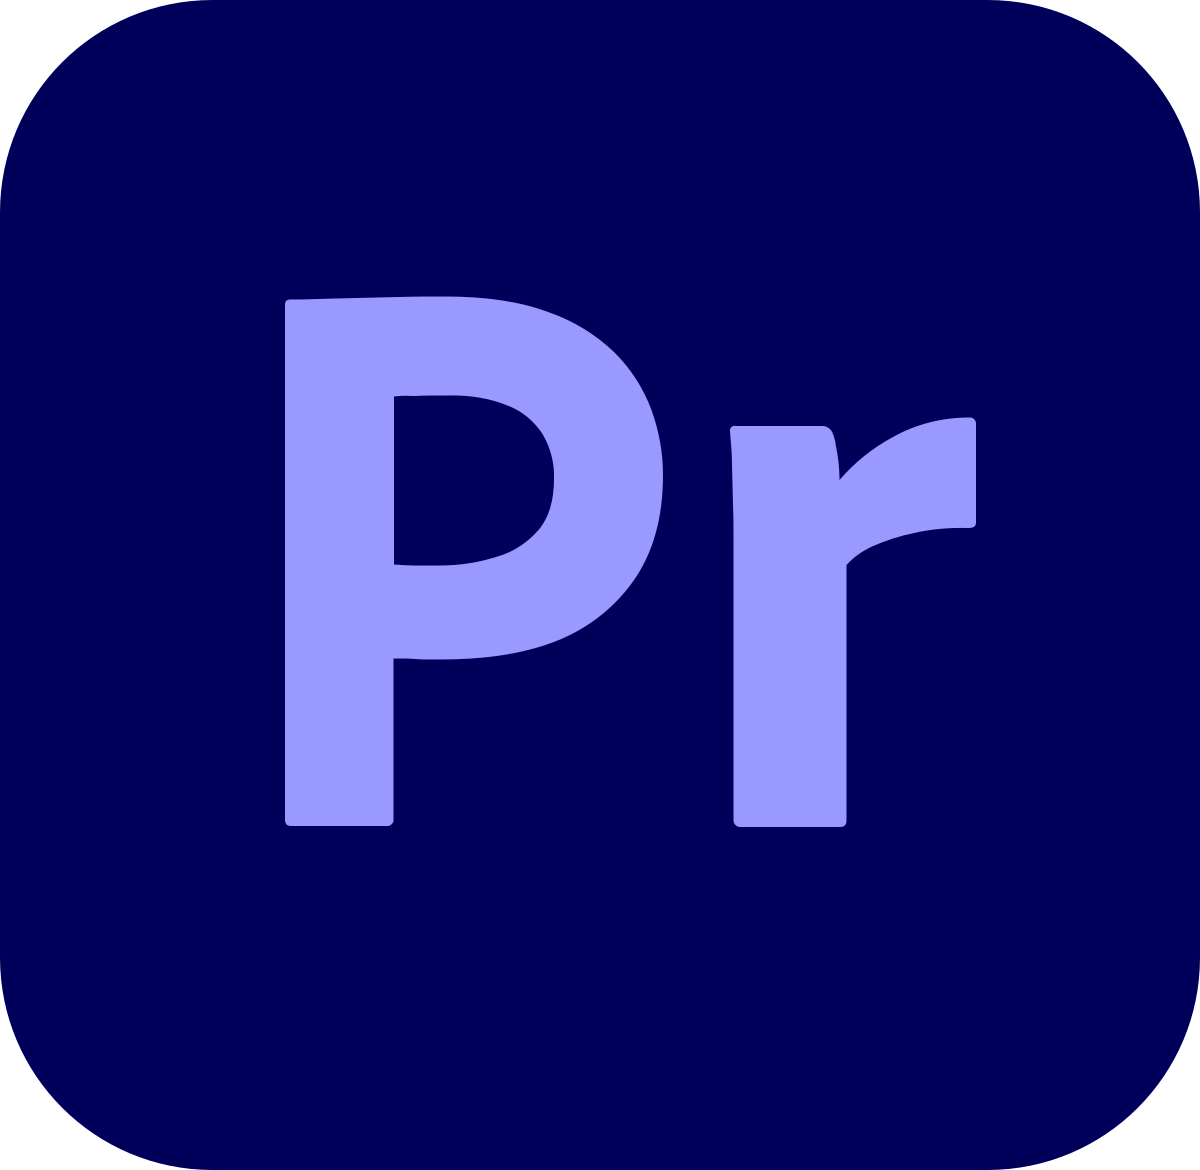 premiere pro video editor free download